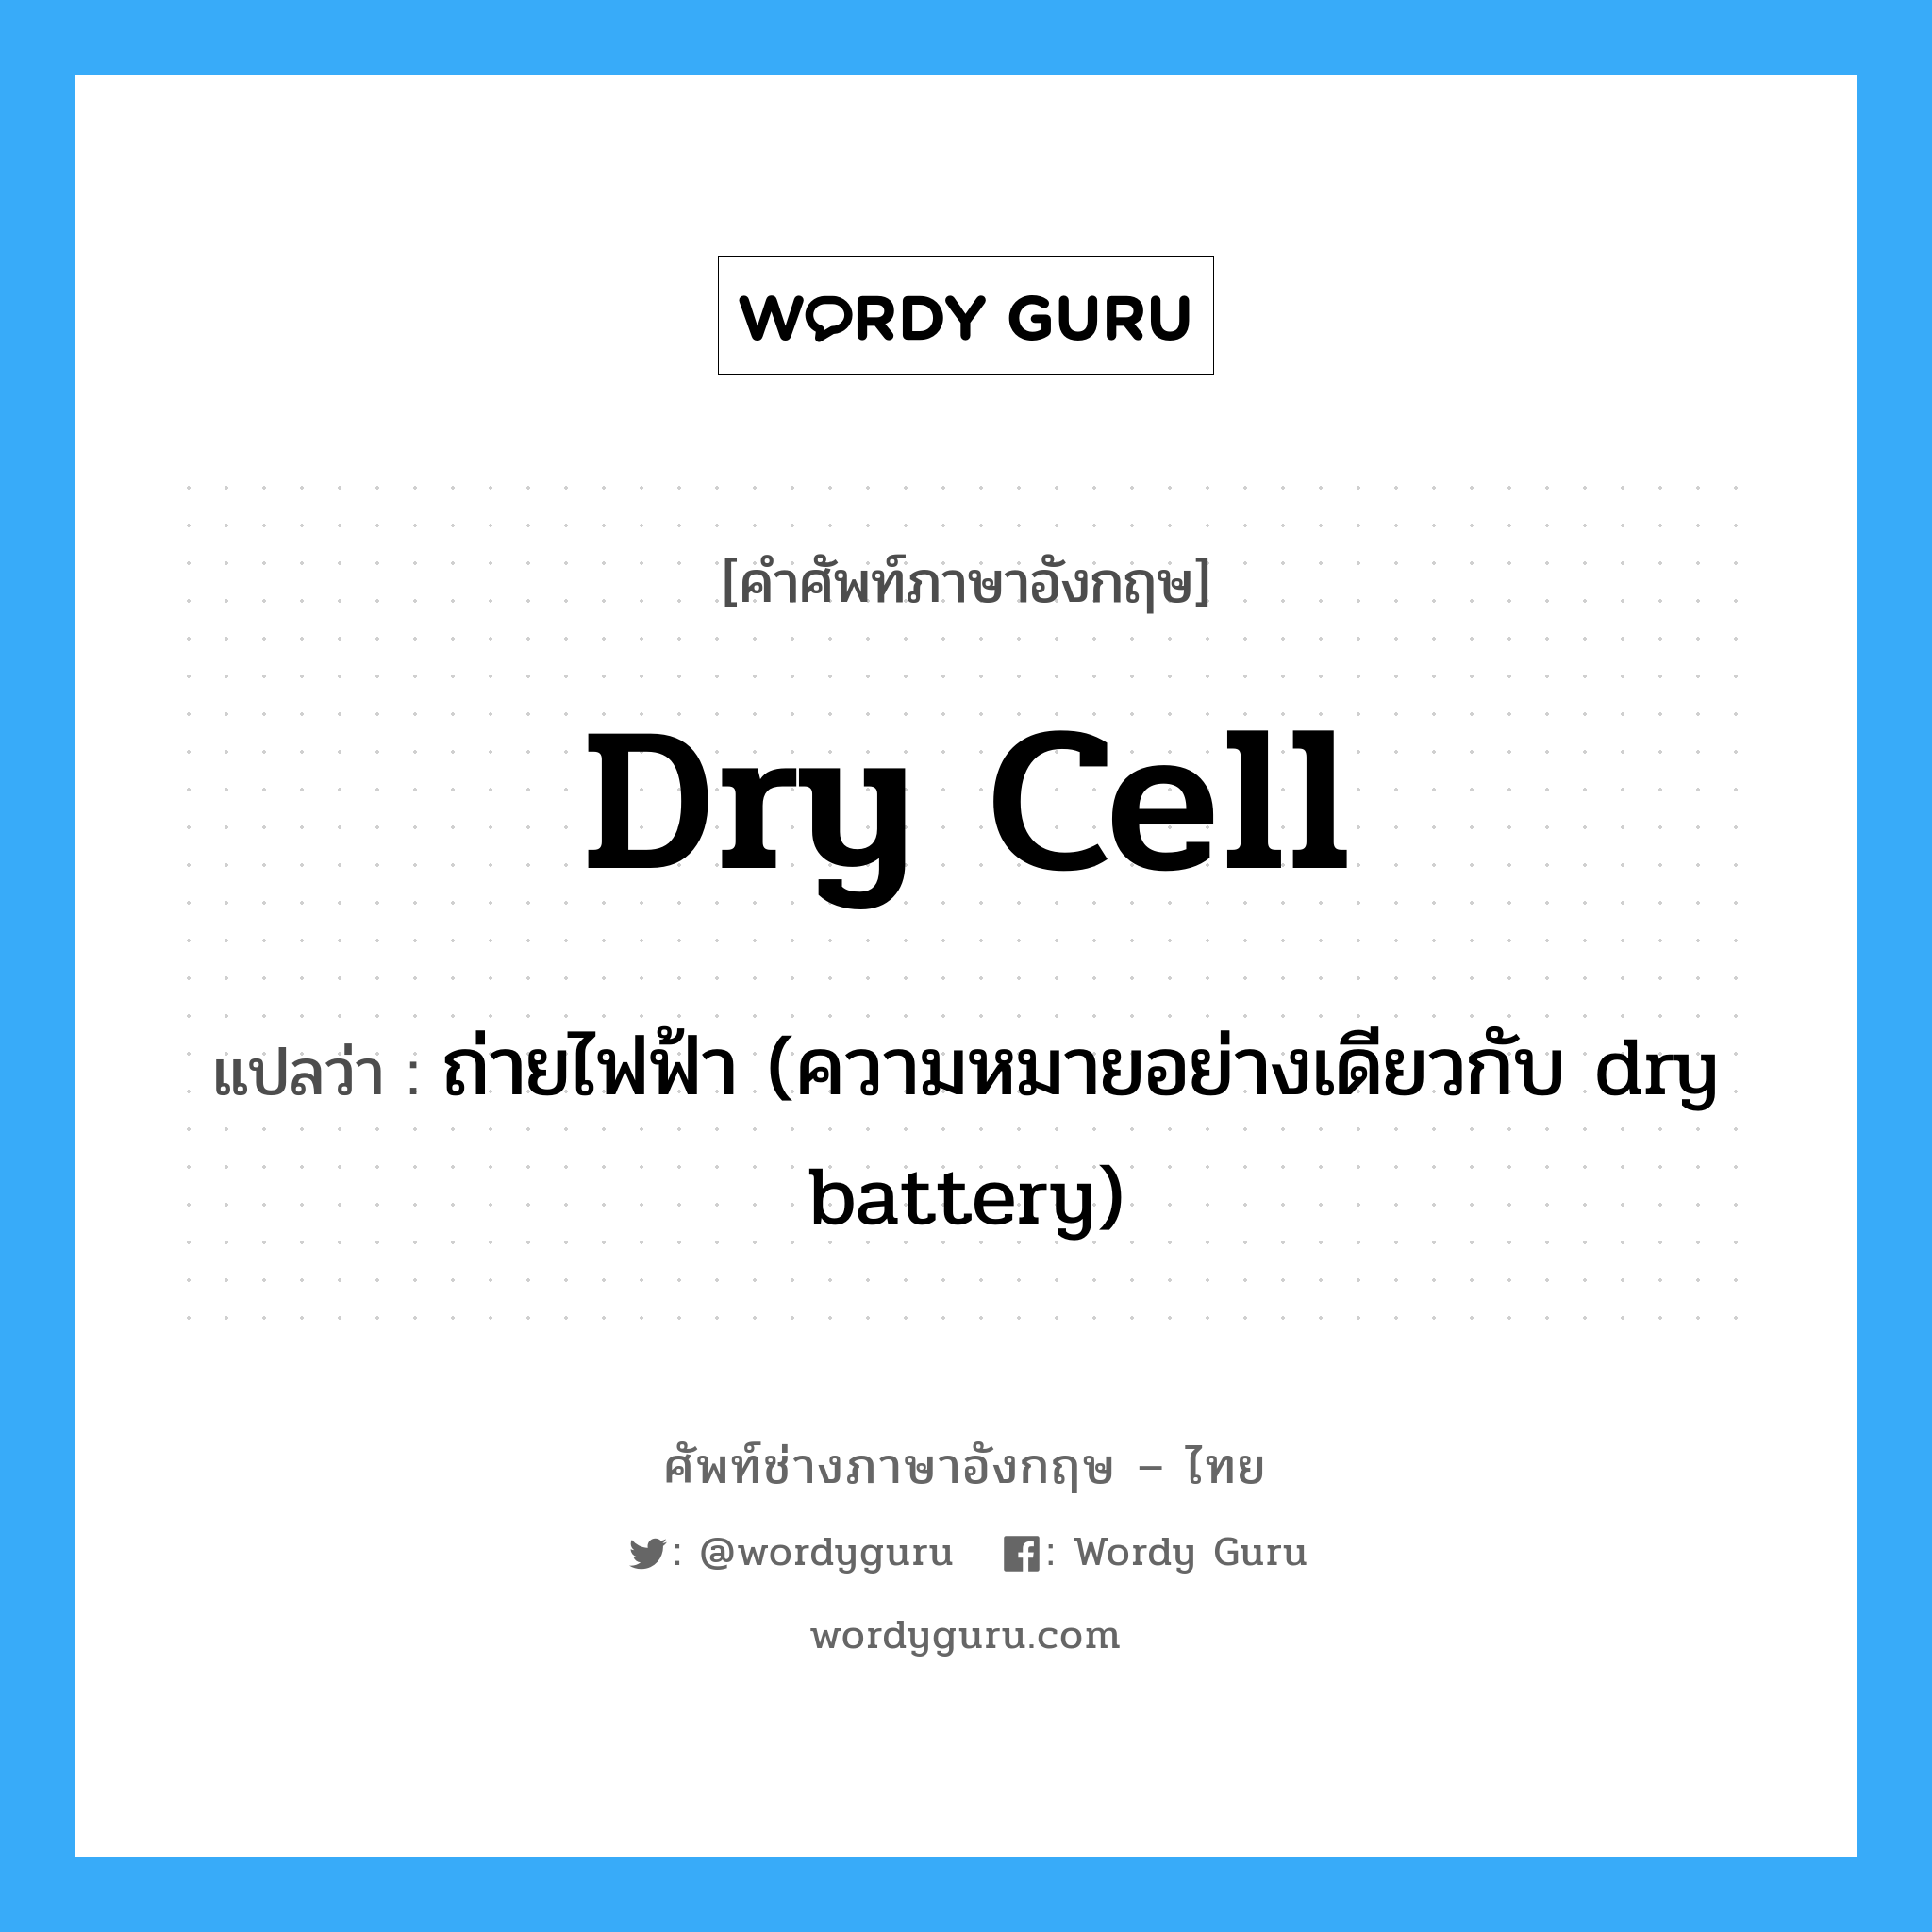 dry cell แปลว่า?, คำศัพท์ช่างภาษาอังกฤษ - ไทย dry cell คำศัพท์ภาษาอังกฤษ dry cell แปลว่า ถ่ายไฟฟ้า (ความหมายอย่างเดียวกับ dry battery)